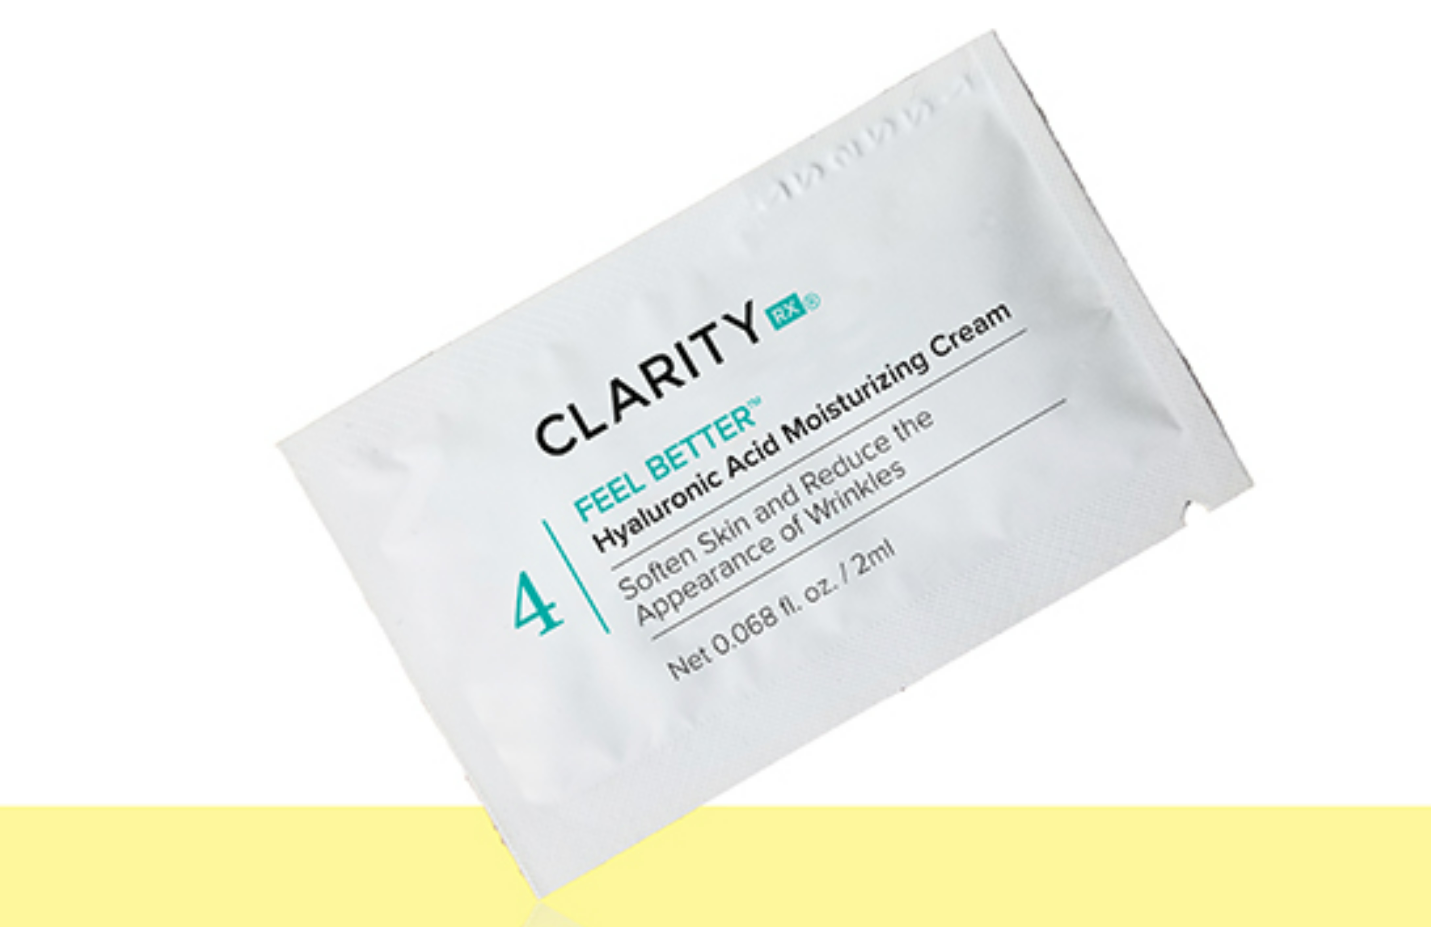 FREE ClarityRx Feel Better Hyaluronic Acid Moisturizing Cream (First 4,000)